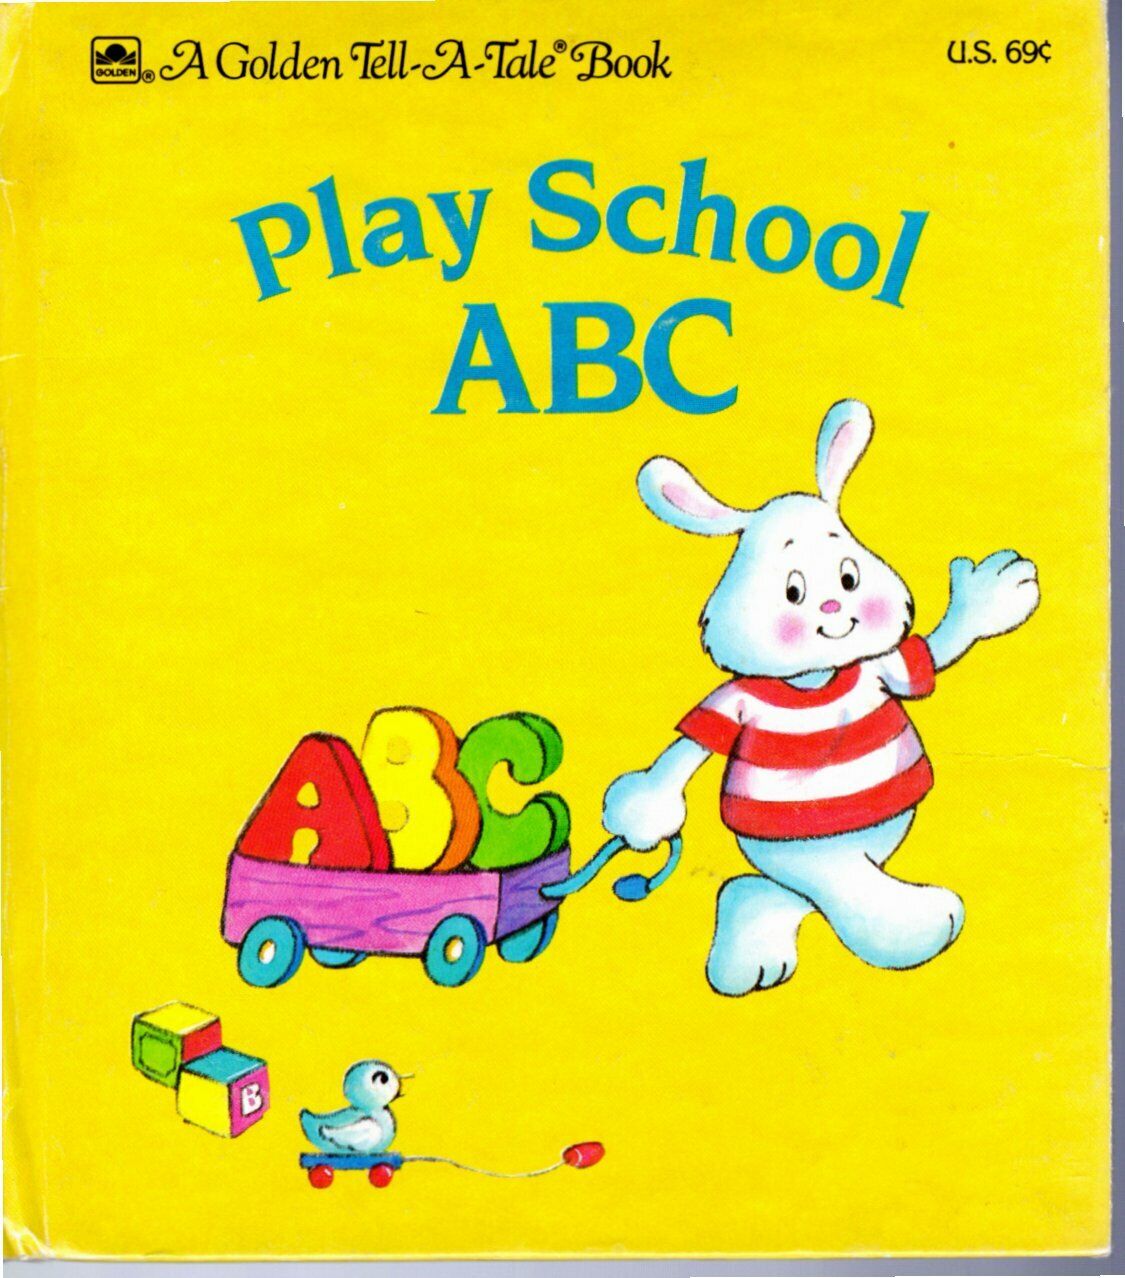 Play School ABC